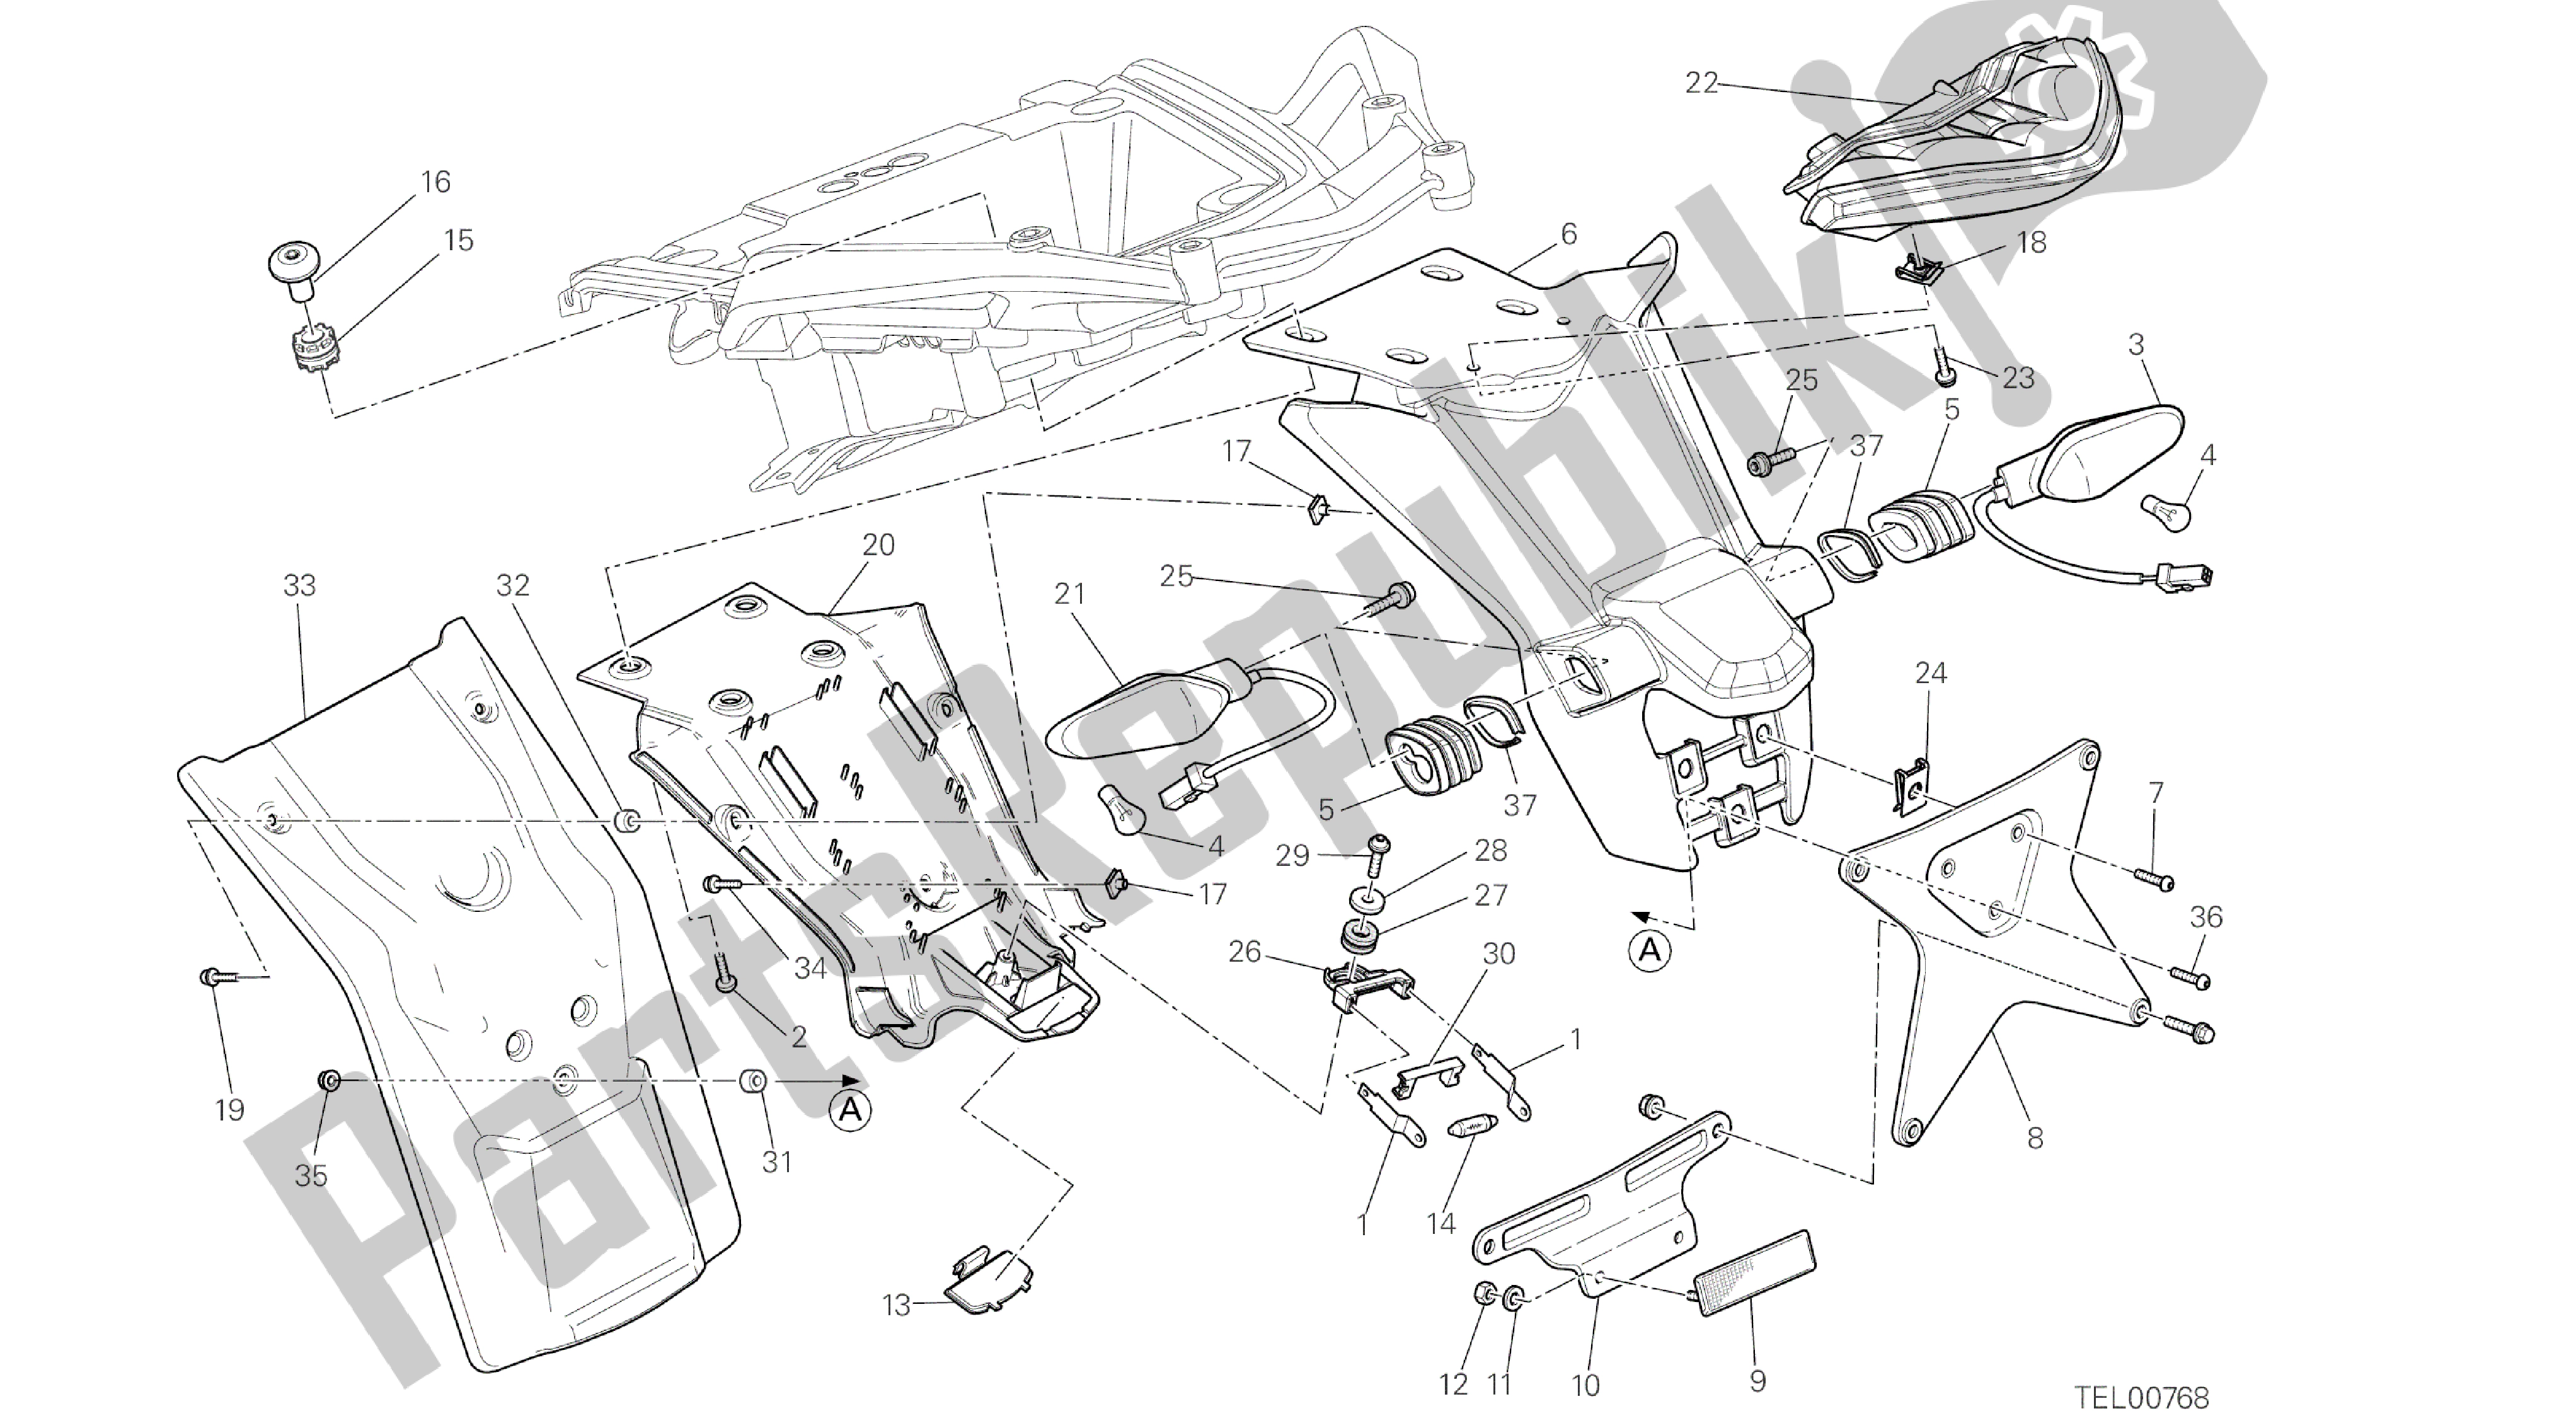 Todas las partes para Dibujo 27b - Soporte De Matrícula - Luz Trasera Aus [mod: Ms1200st; Xst: Aus] Group Electric de Ducati Multistrada S Touring 1200 2014